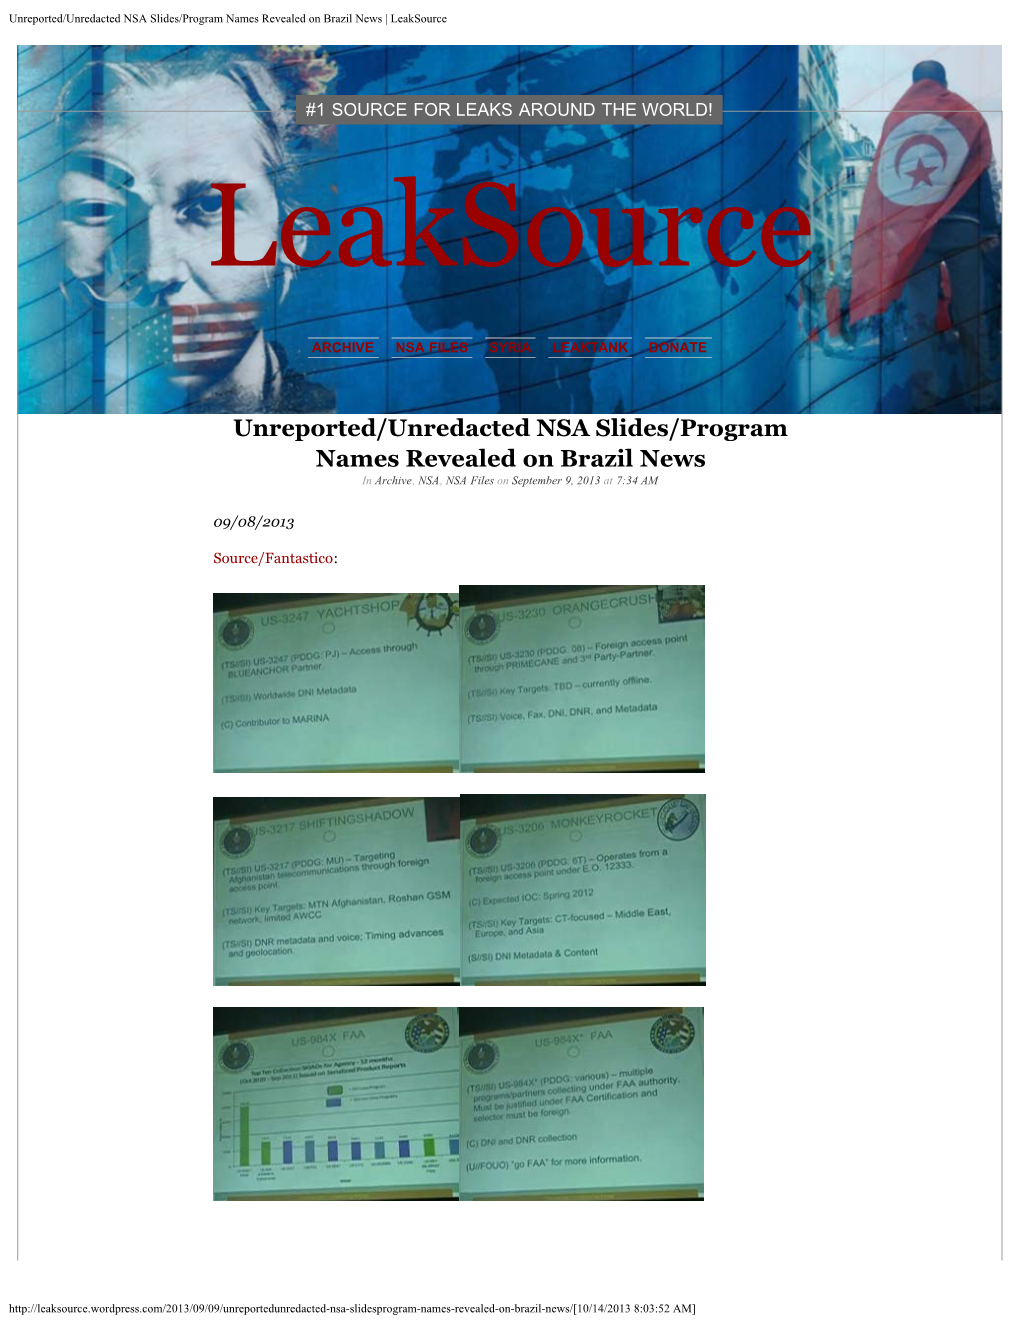 Unreported/Unredacted NSA Slides/Program Names Revealed on Brazil News | Leaksource